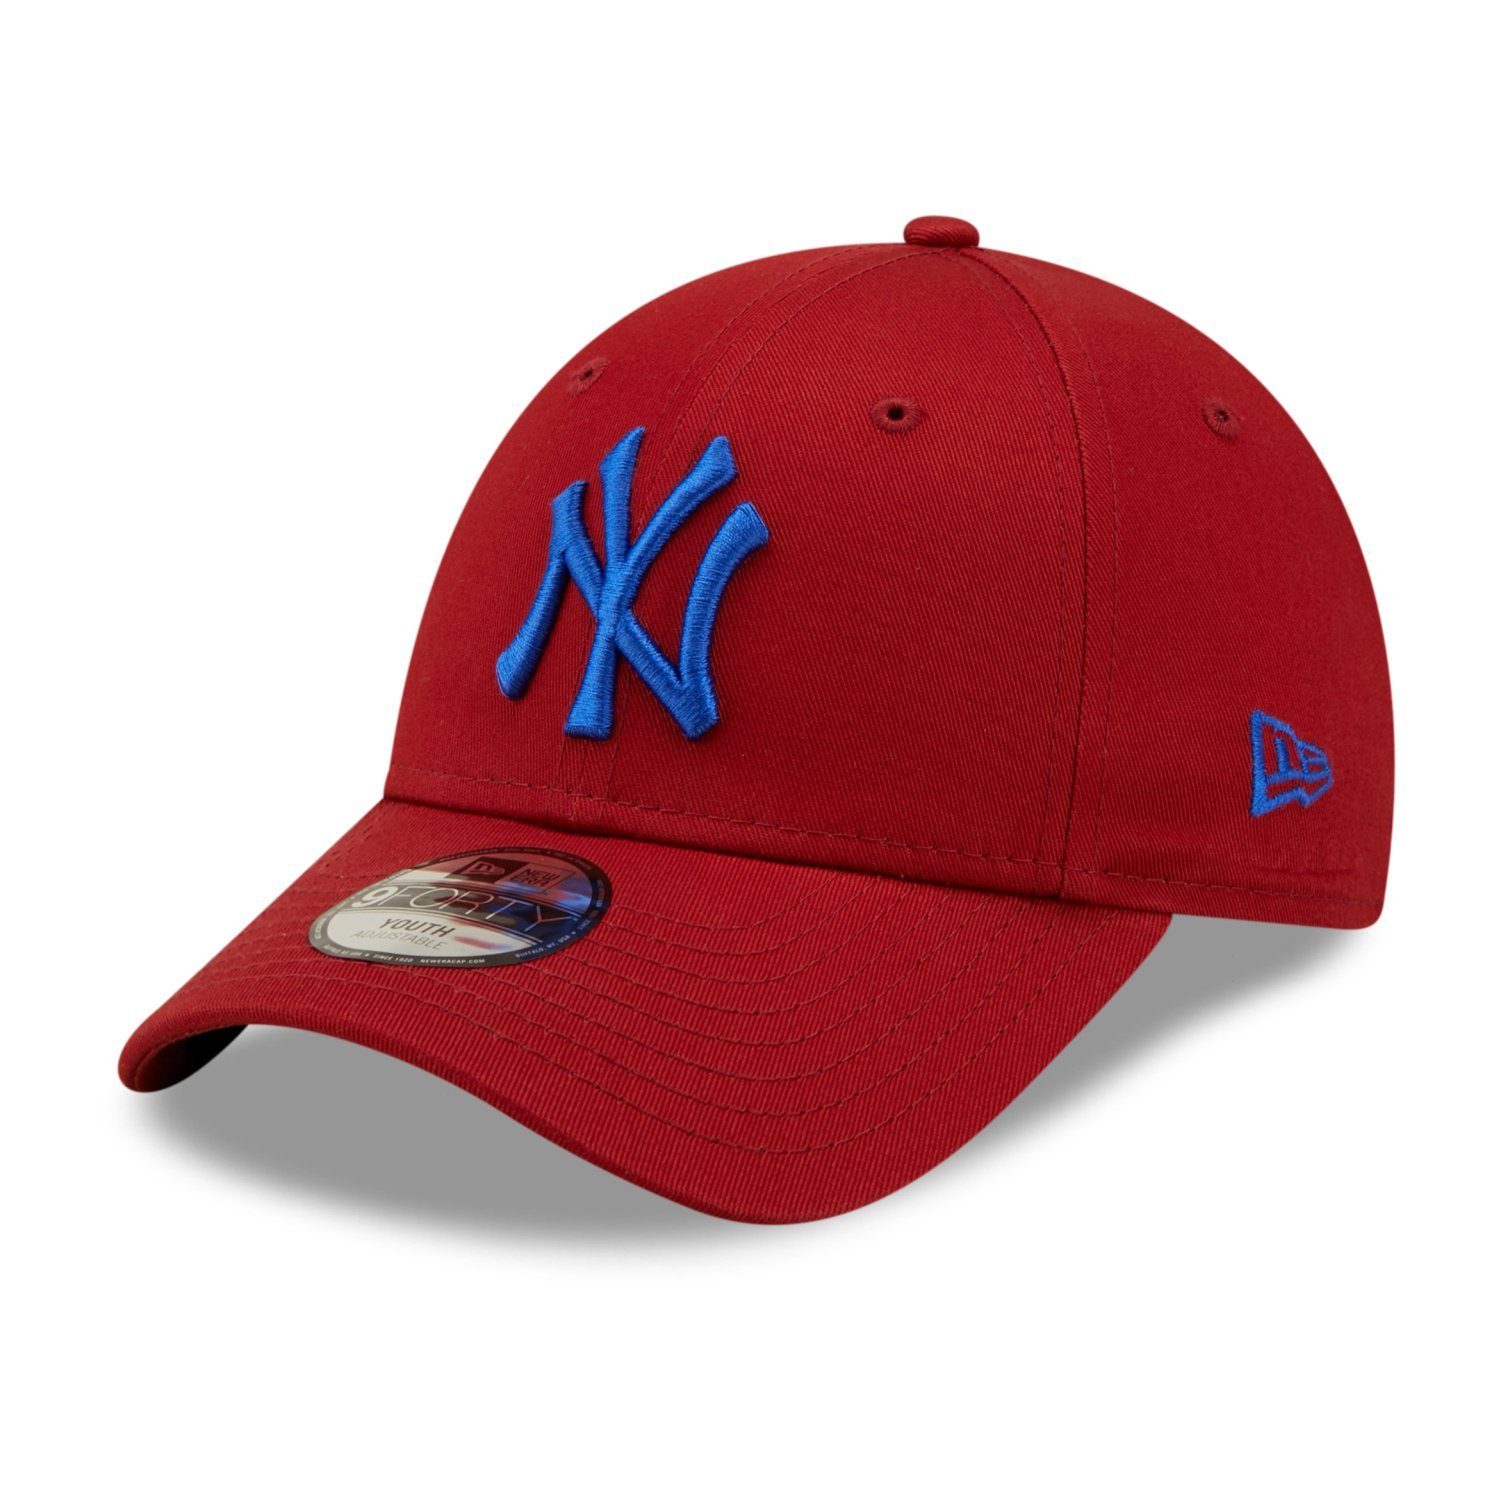 Baseball New York Cap Yankees 9Forty Era New